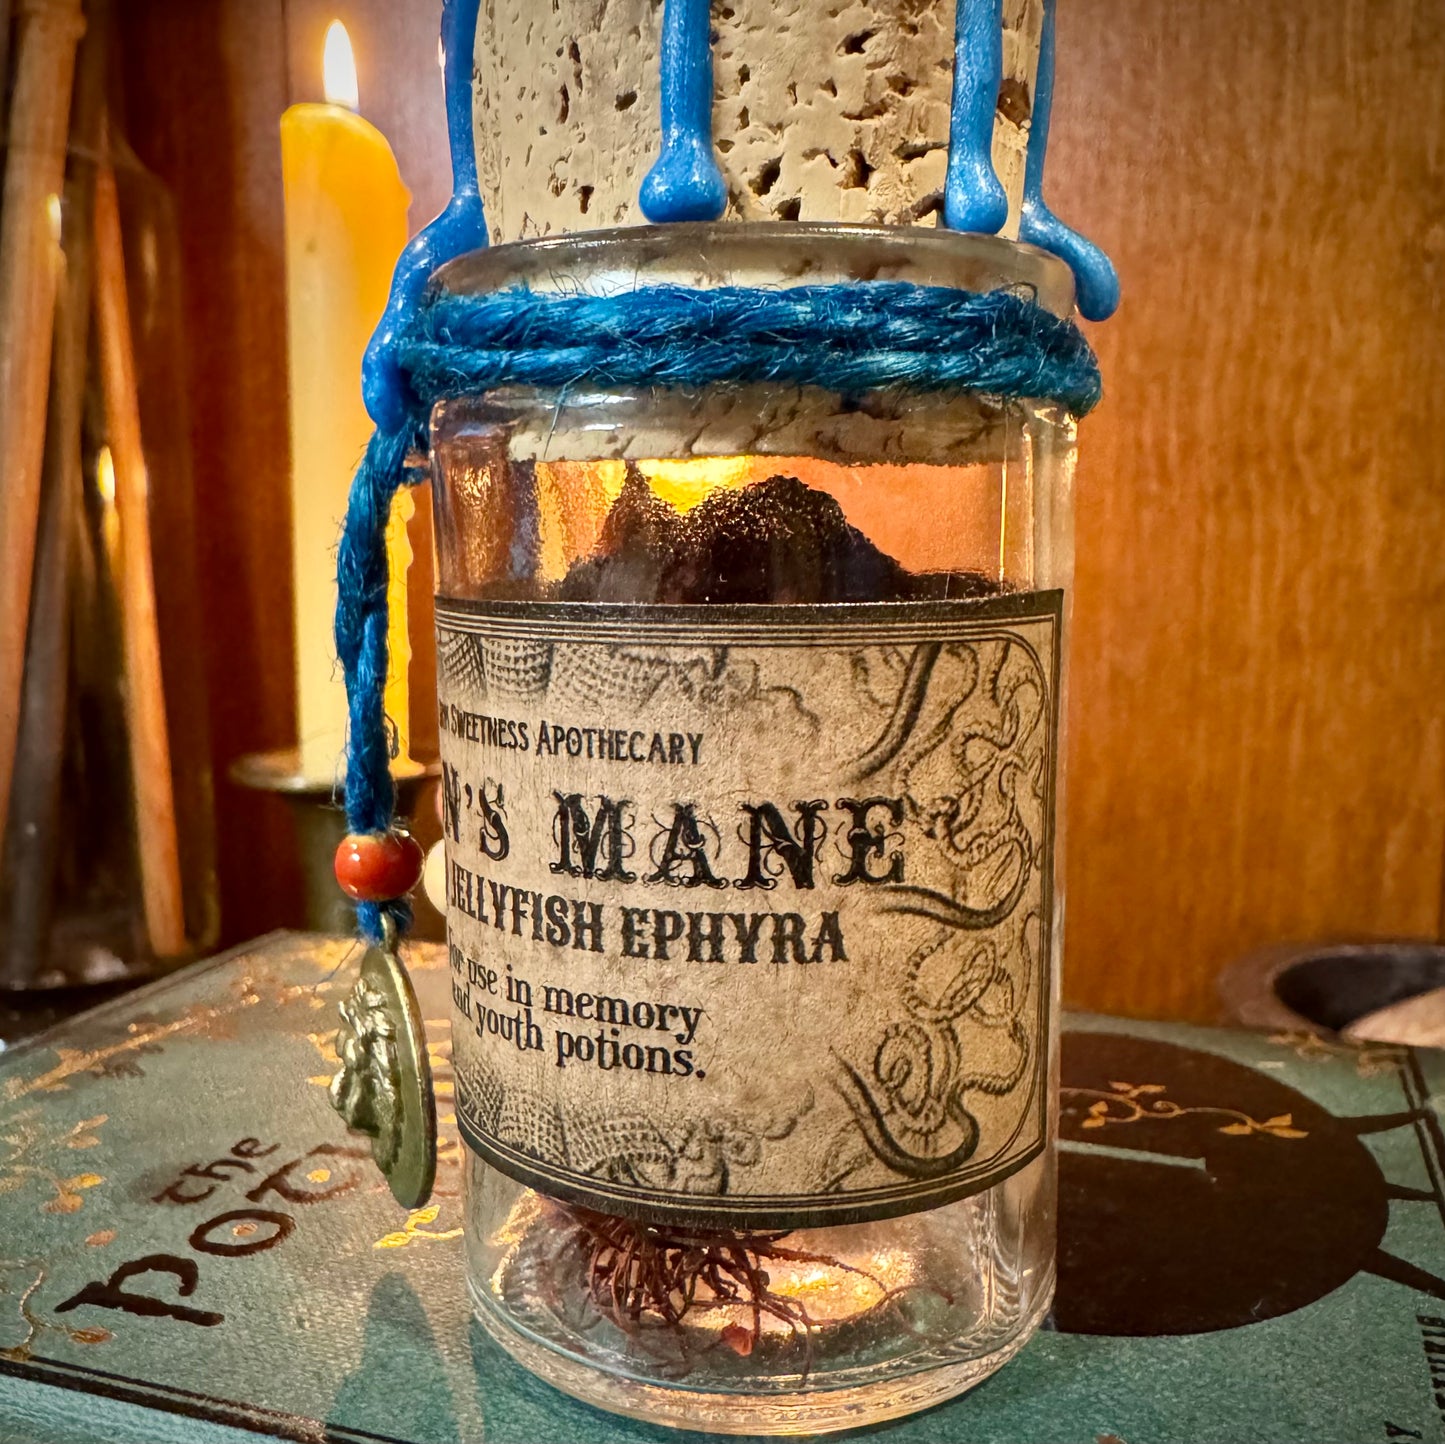 Lions Mane, Dried Jellyfish Ephyra, A Decorative Apothecary Jar